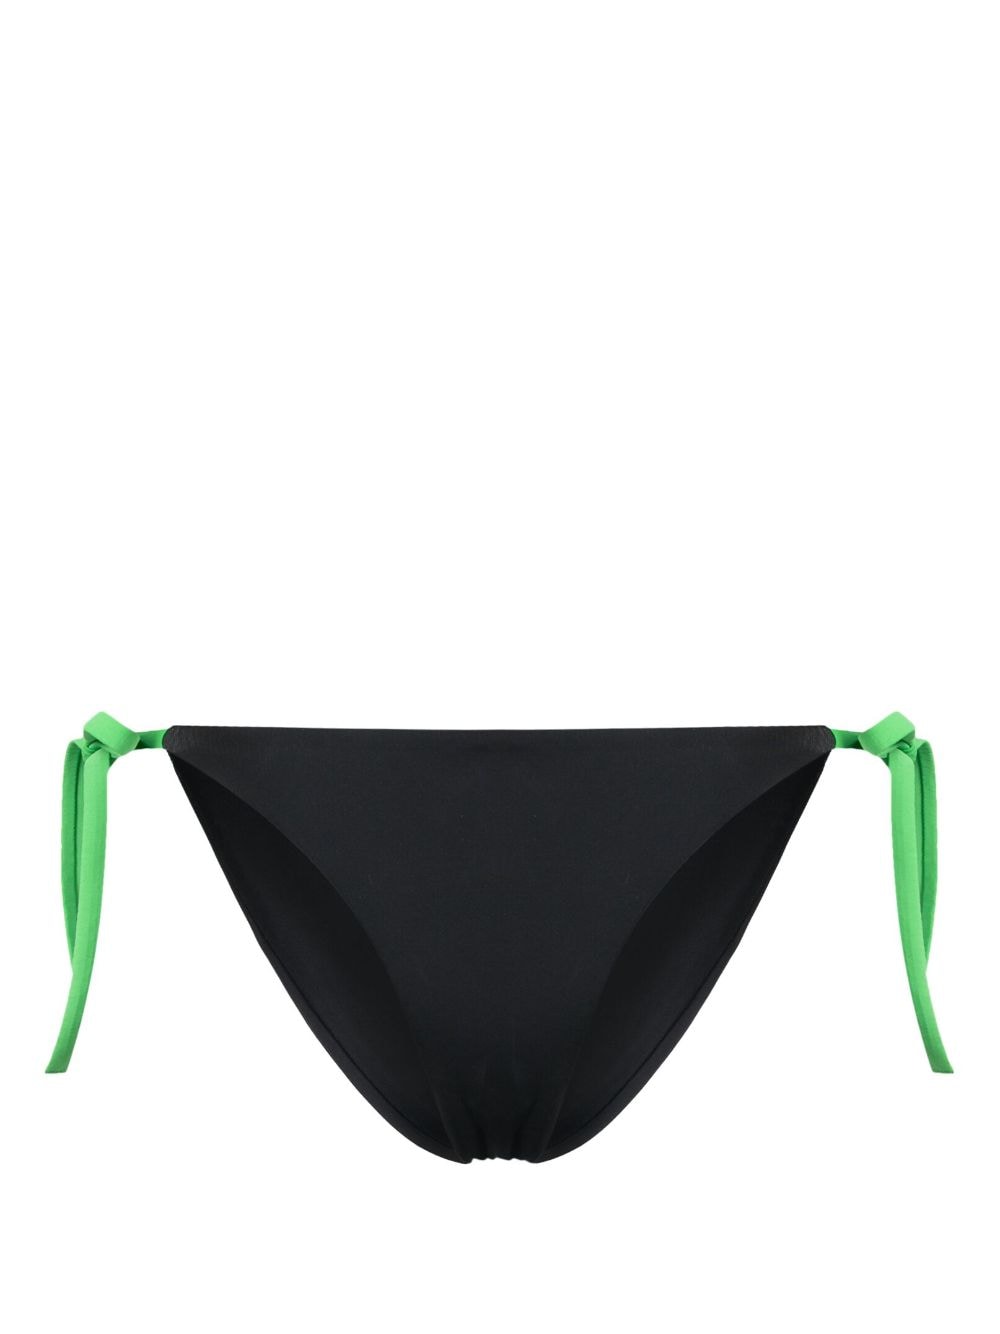 Cynthia Rowley side-tie bikini bottoms - Black von Cynthia Rowley